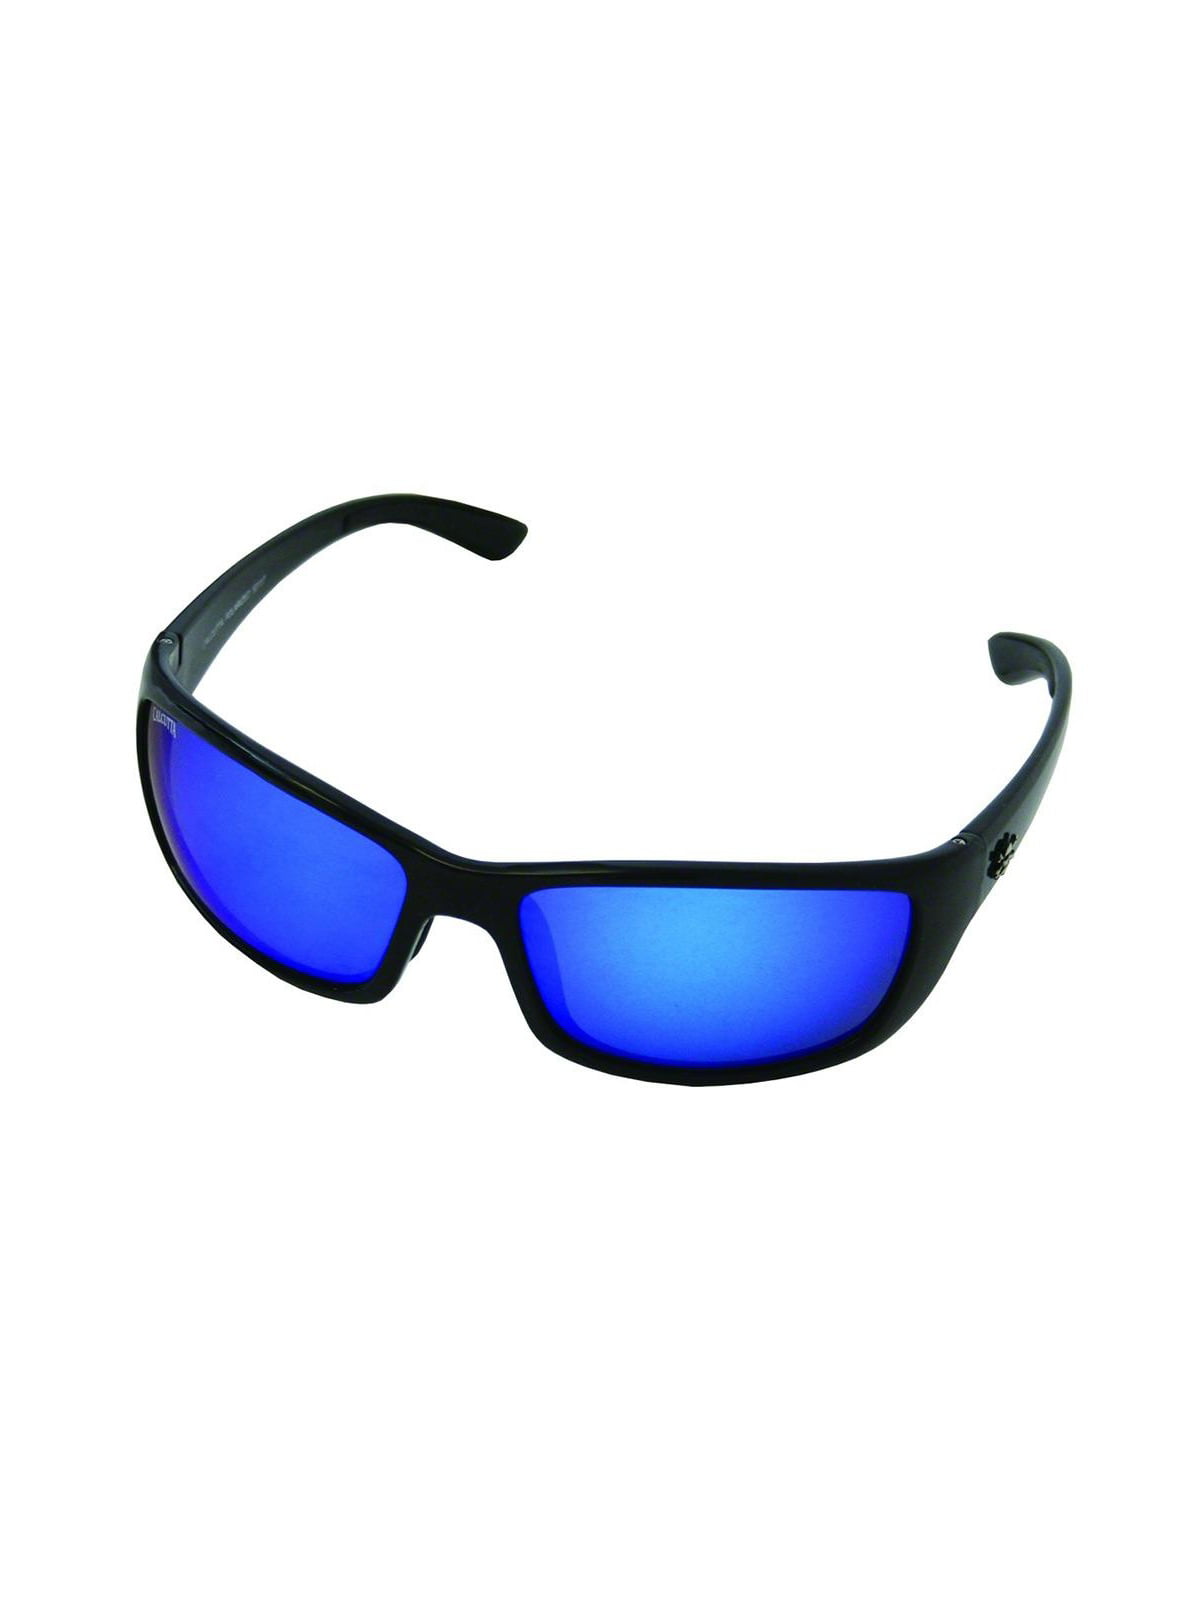 Calcutta Lc1bm Los Cabos Sunglasses Black Frame Blue Mirror Lens Polarized for sale online 